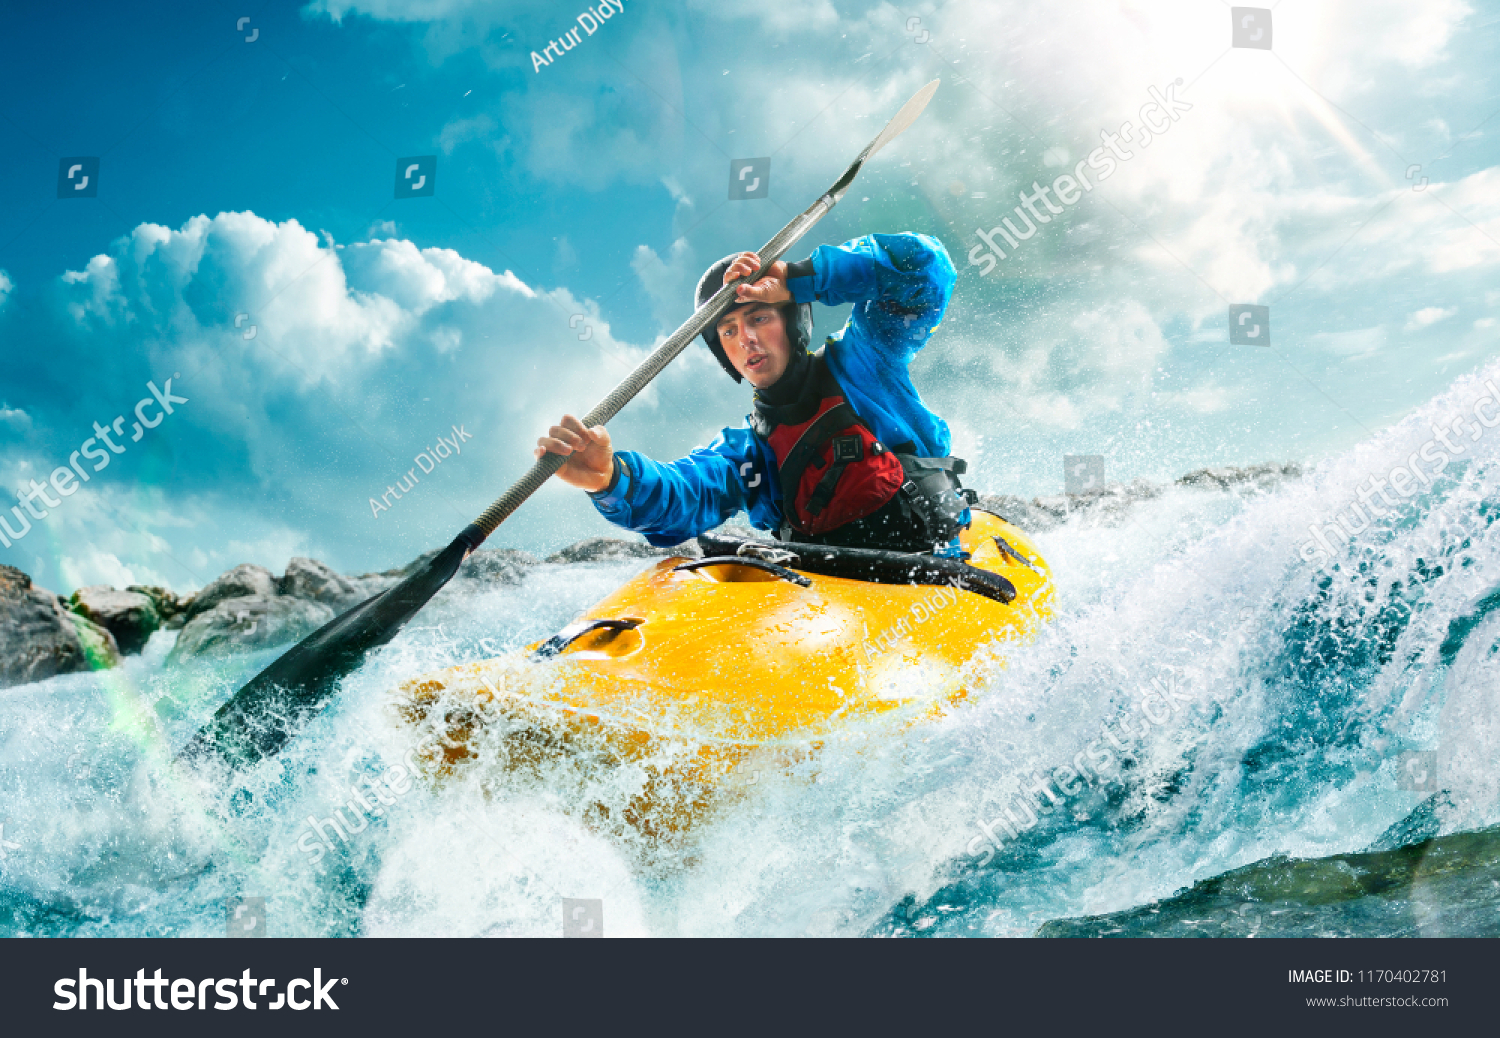 Whitewater kayaking, extreme kayaking. A guy in a kayak sails on a mountain river #1170402781